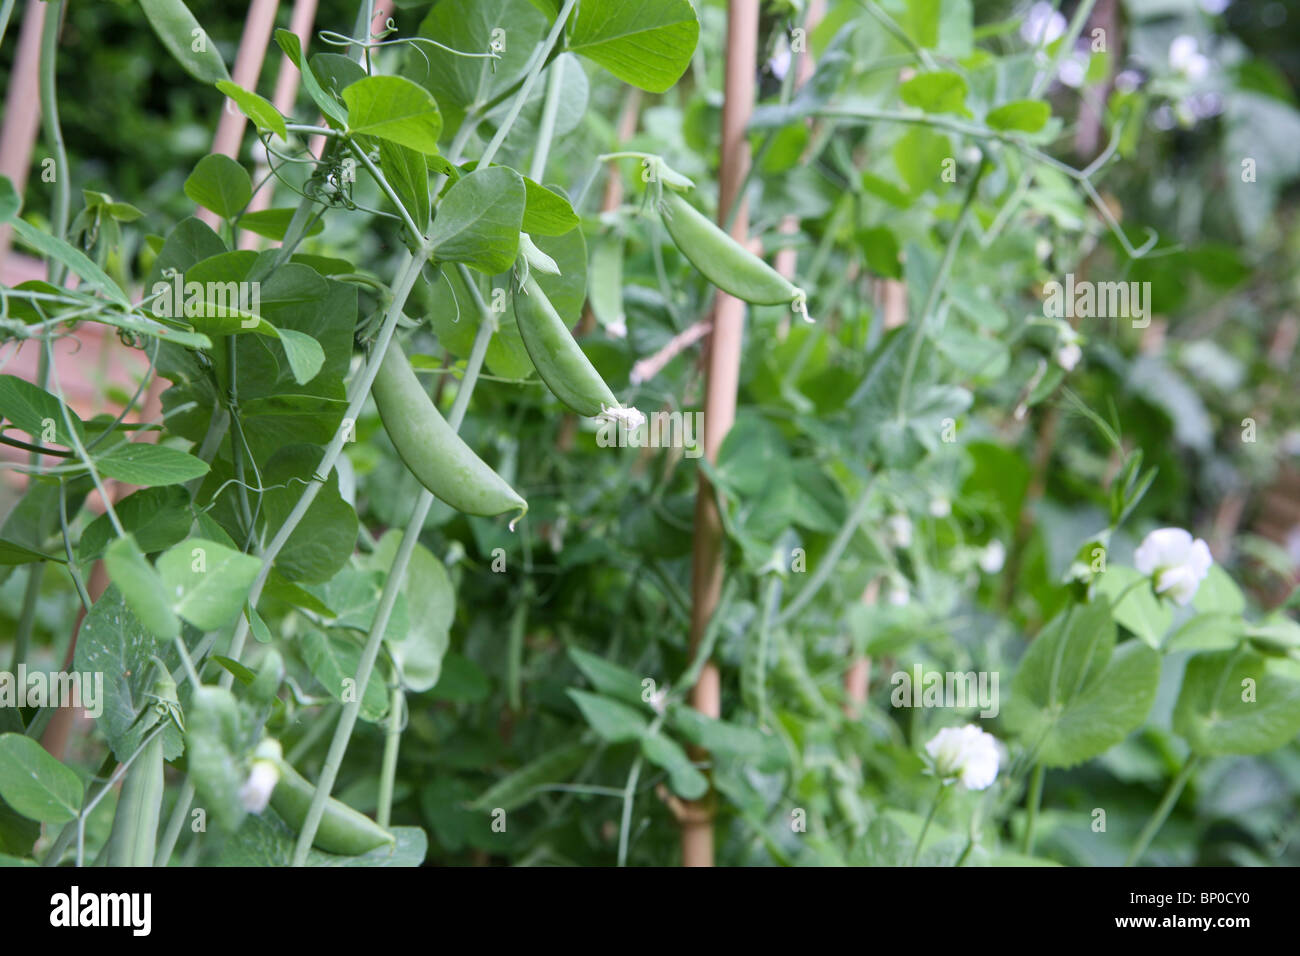 (Pisum sativum var. saccharatum) Mange tout / Snow peas and sugar snaps / Snap peas (Pisum sativum var. macrocarpon) in a garden Stock Photo